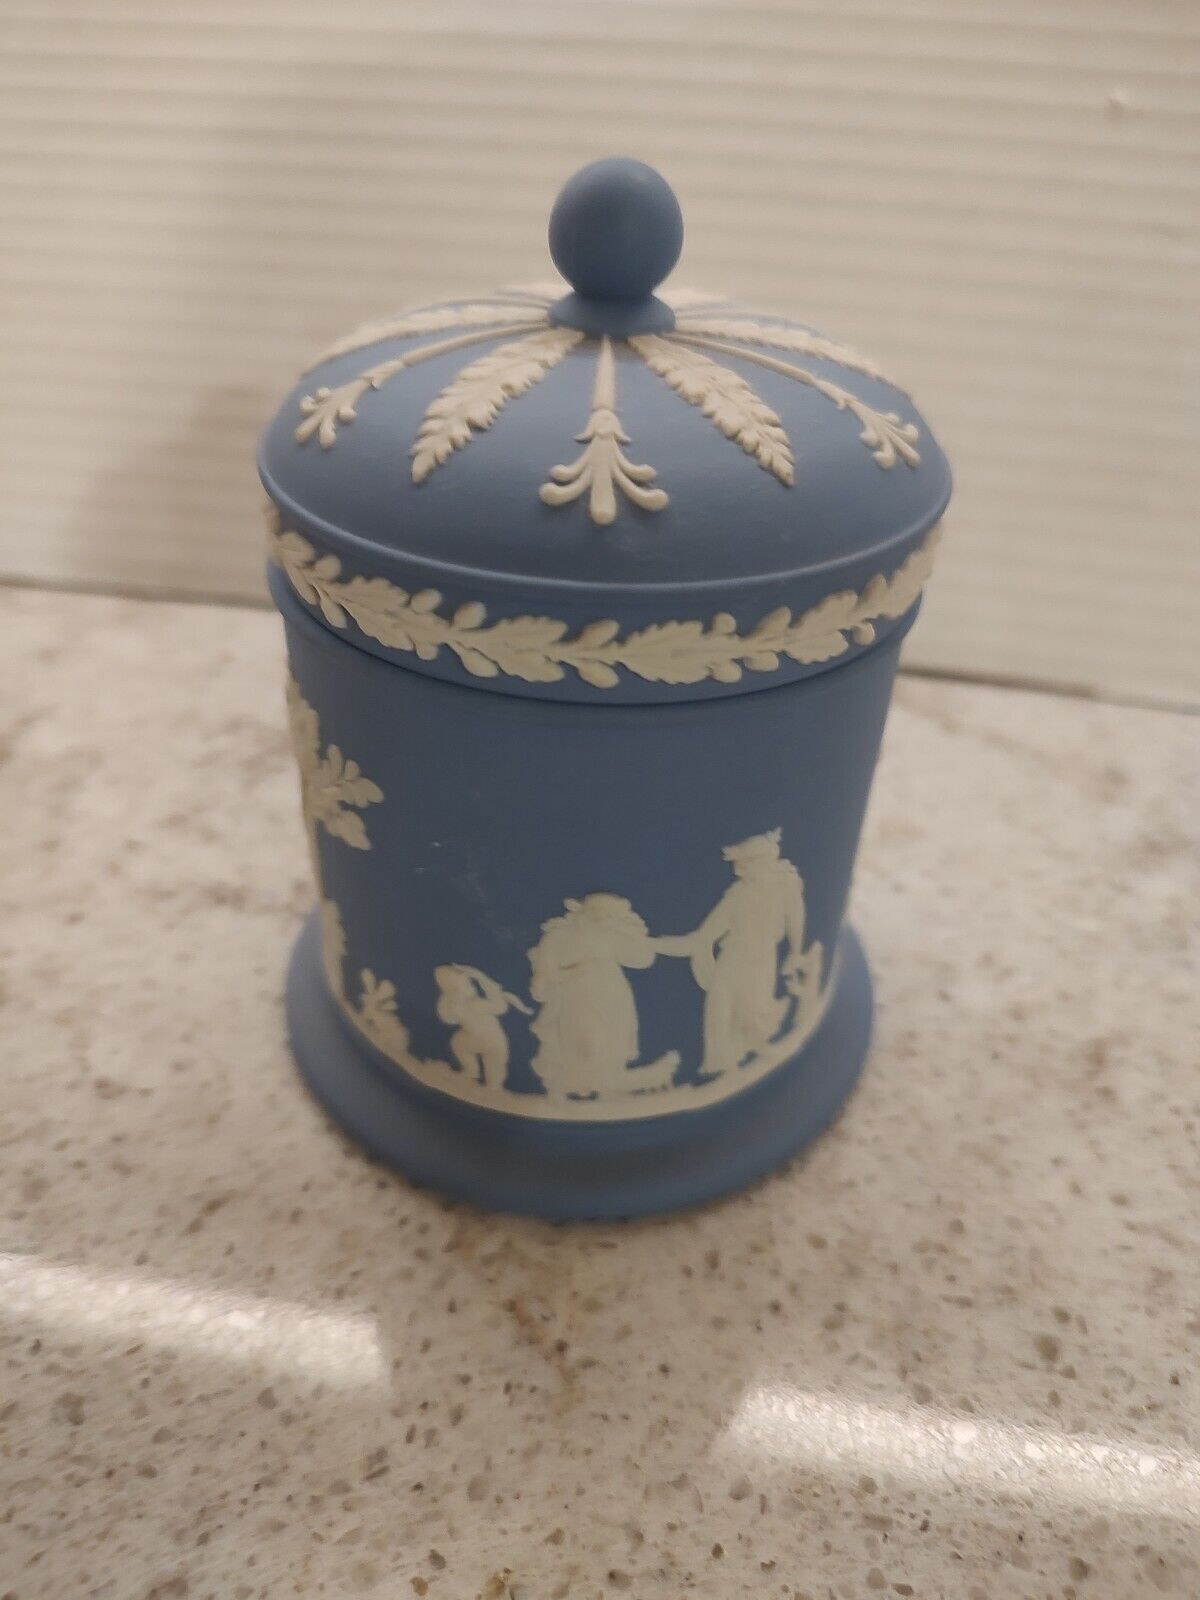 Vintage Wedgwood Blue Jasperware Cigarette/Tobacco Jar with Lid - 4.5” Tall